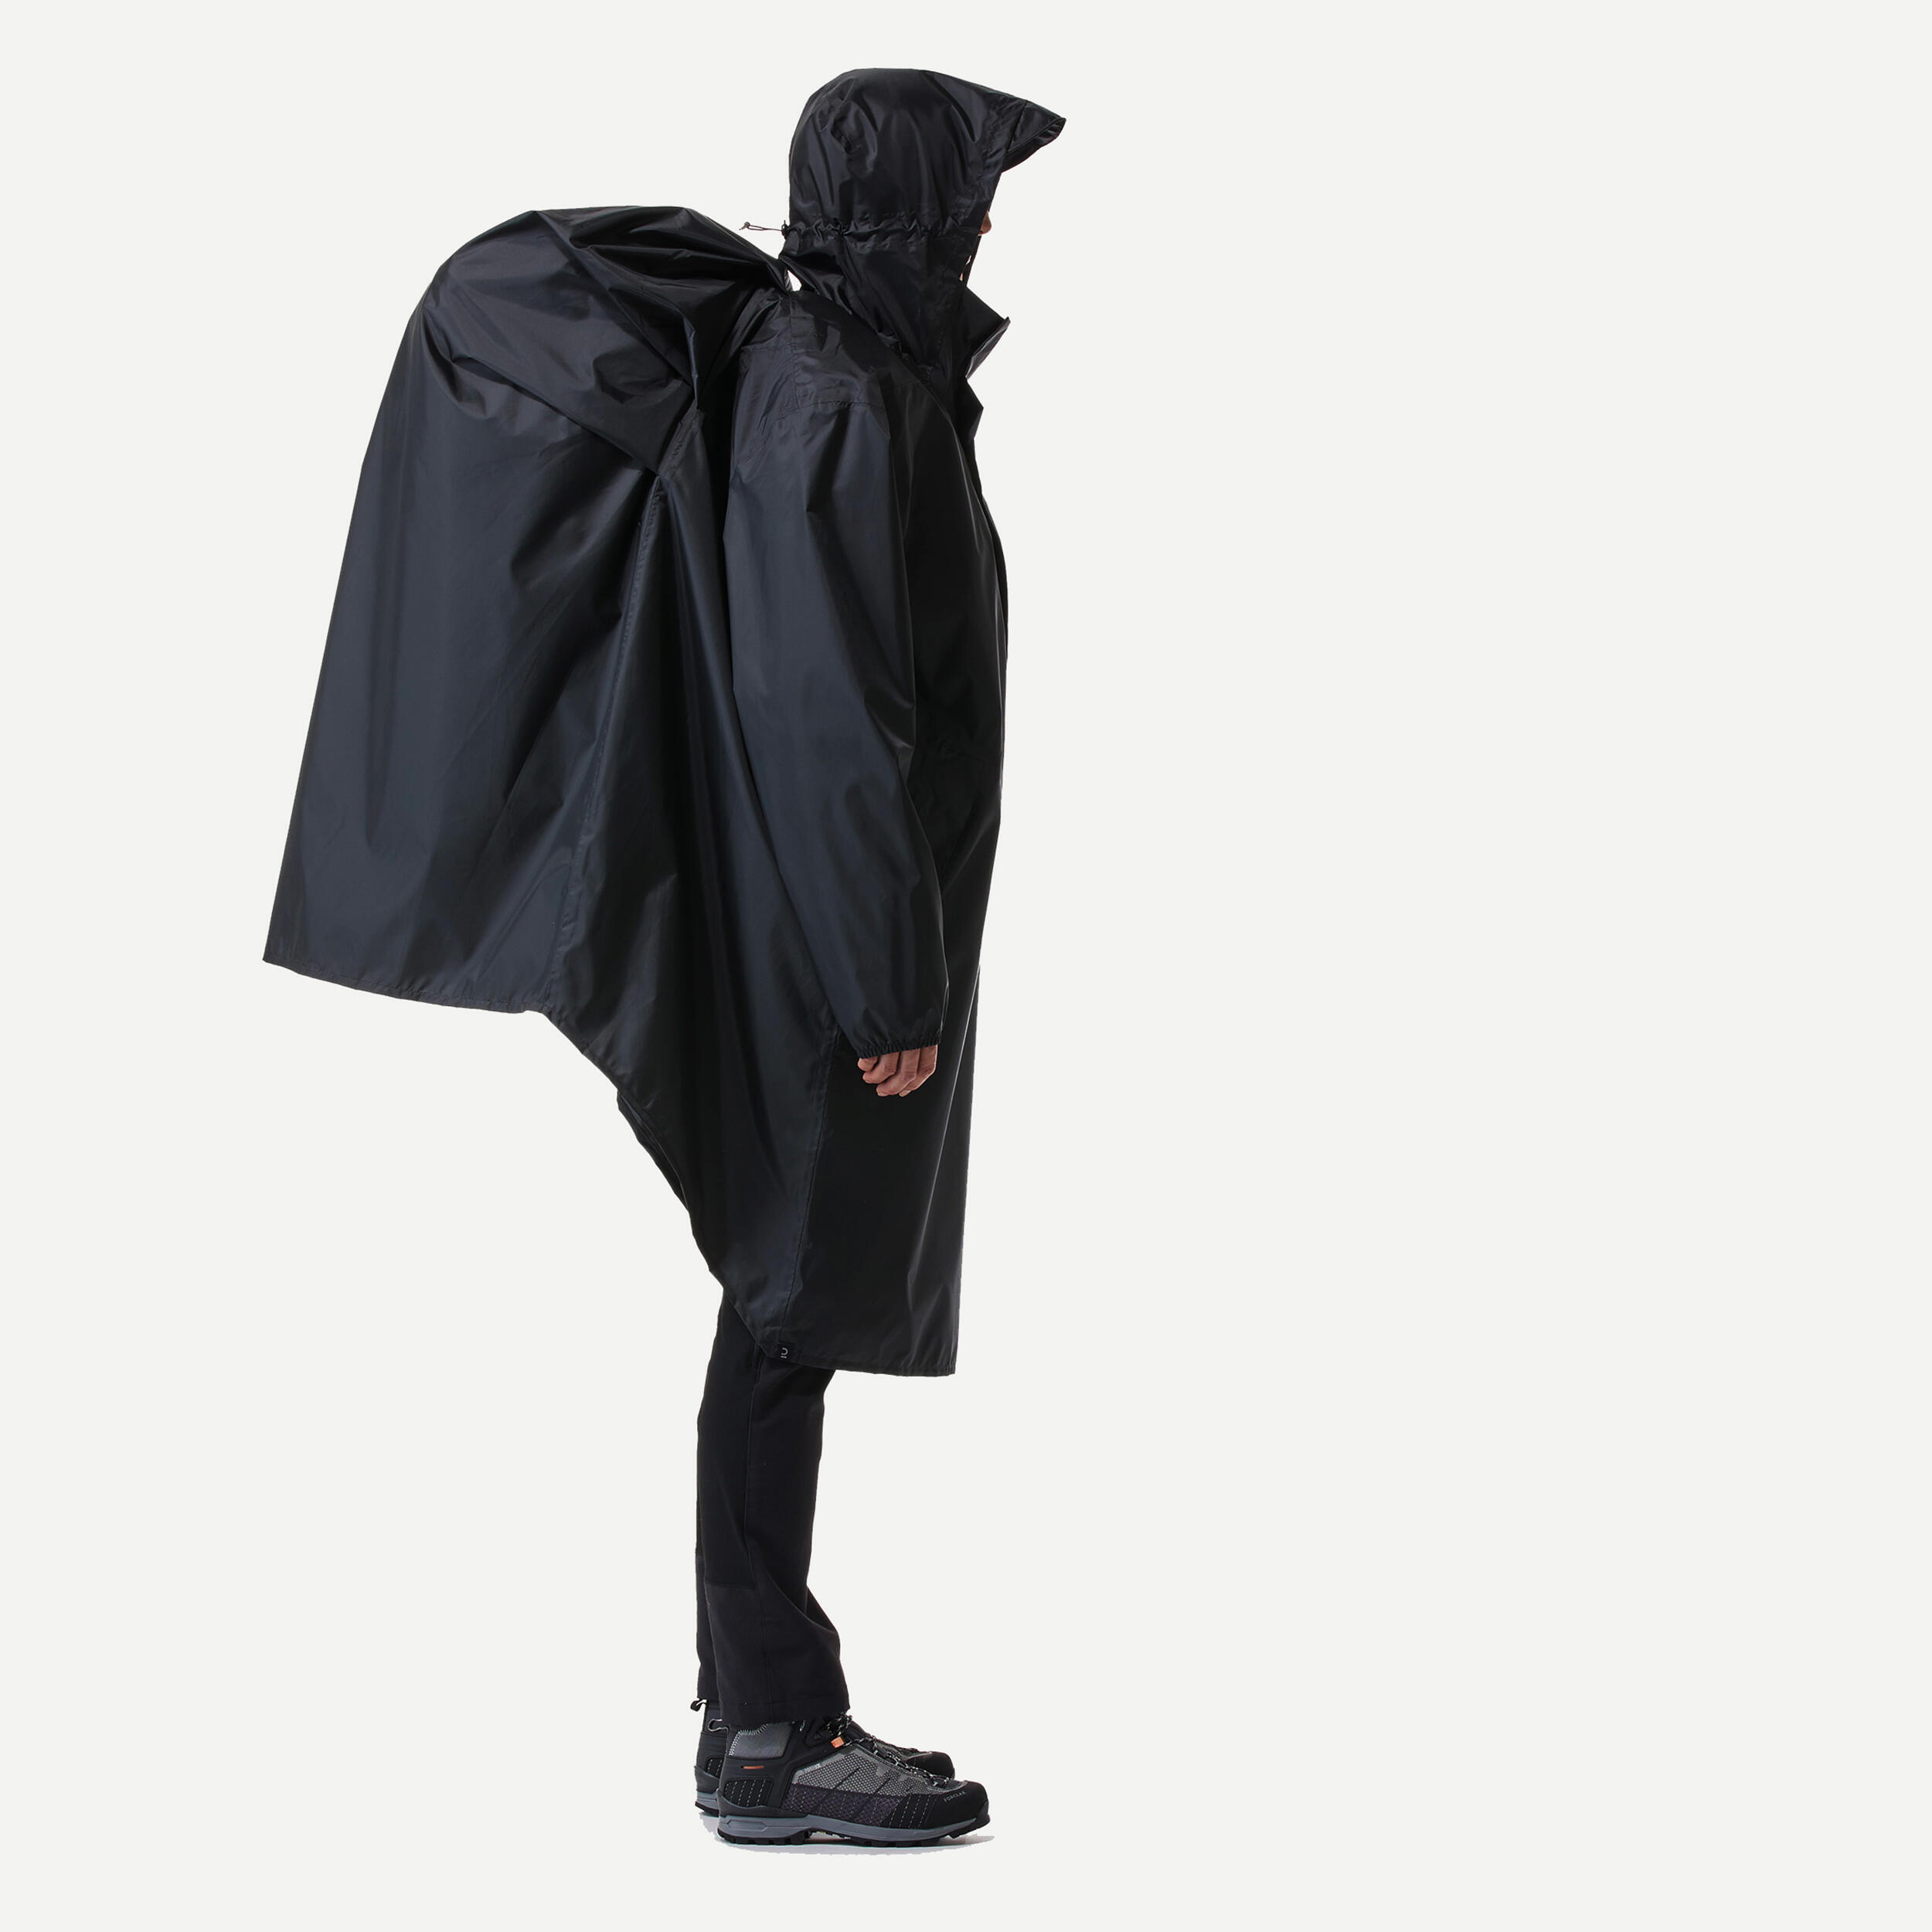 FORCLAZ Hiking rain poncho - MT500  - 60L - Black